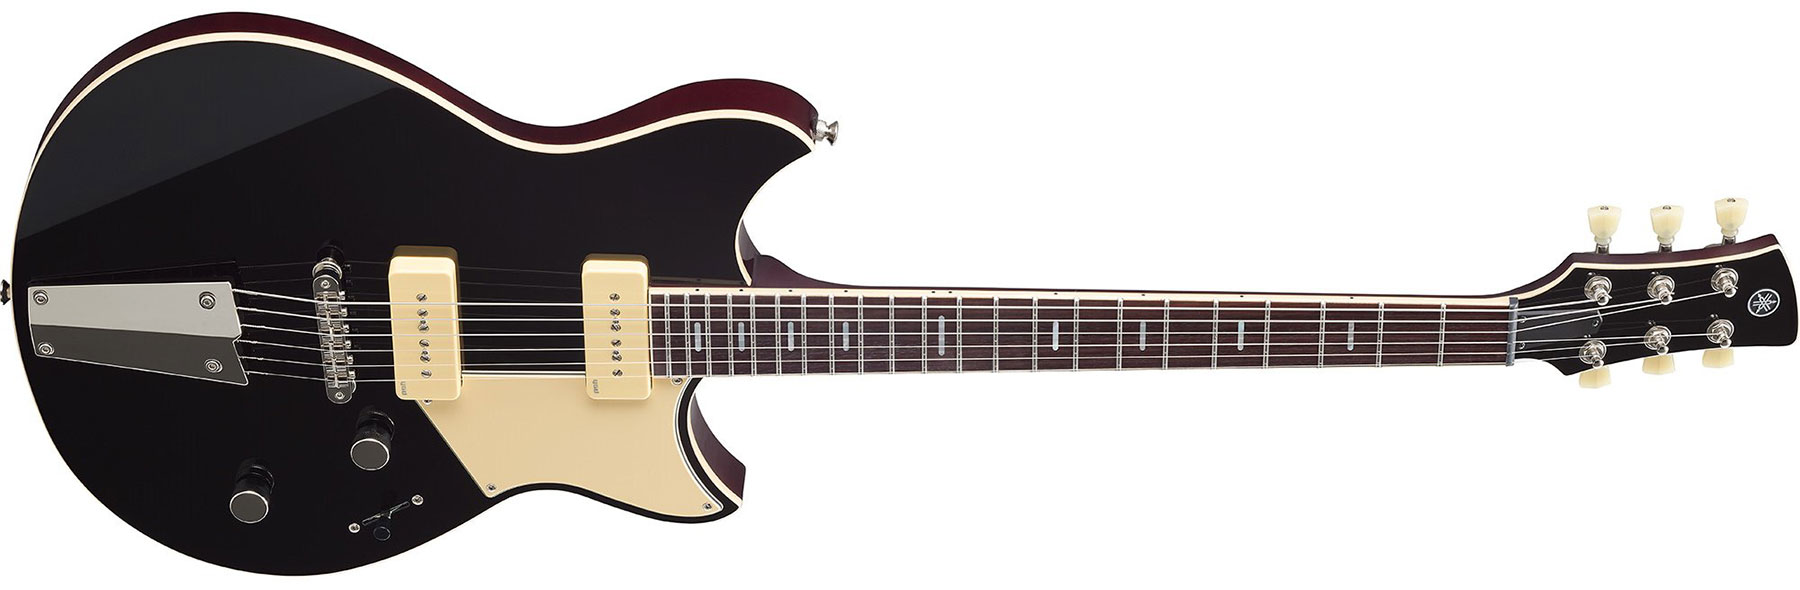 Yamaha Rss02t Revstar Standard 2p90 Ht Rw - Black - Double Cut E-Gitarre - Variation 1